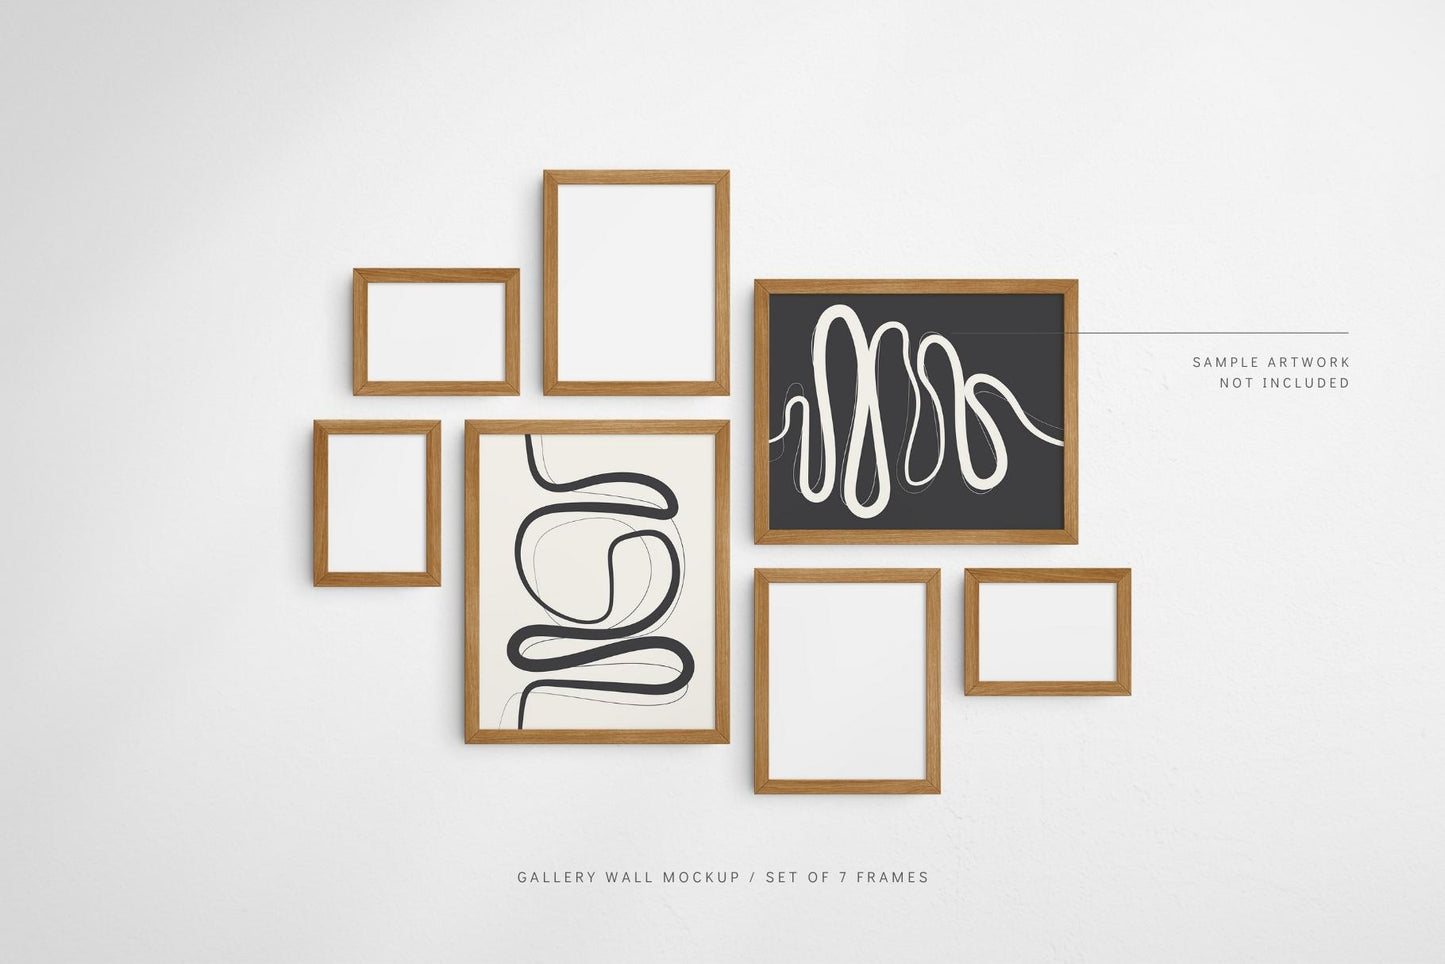 Gallery Wall Mockup | Set of 7 Frames | Frame Mockup | PSD | Wood Texture